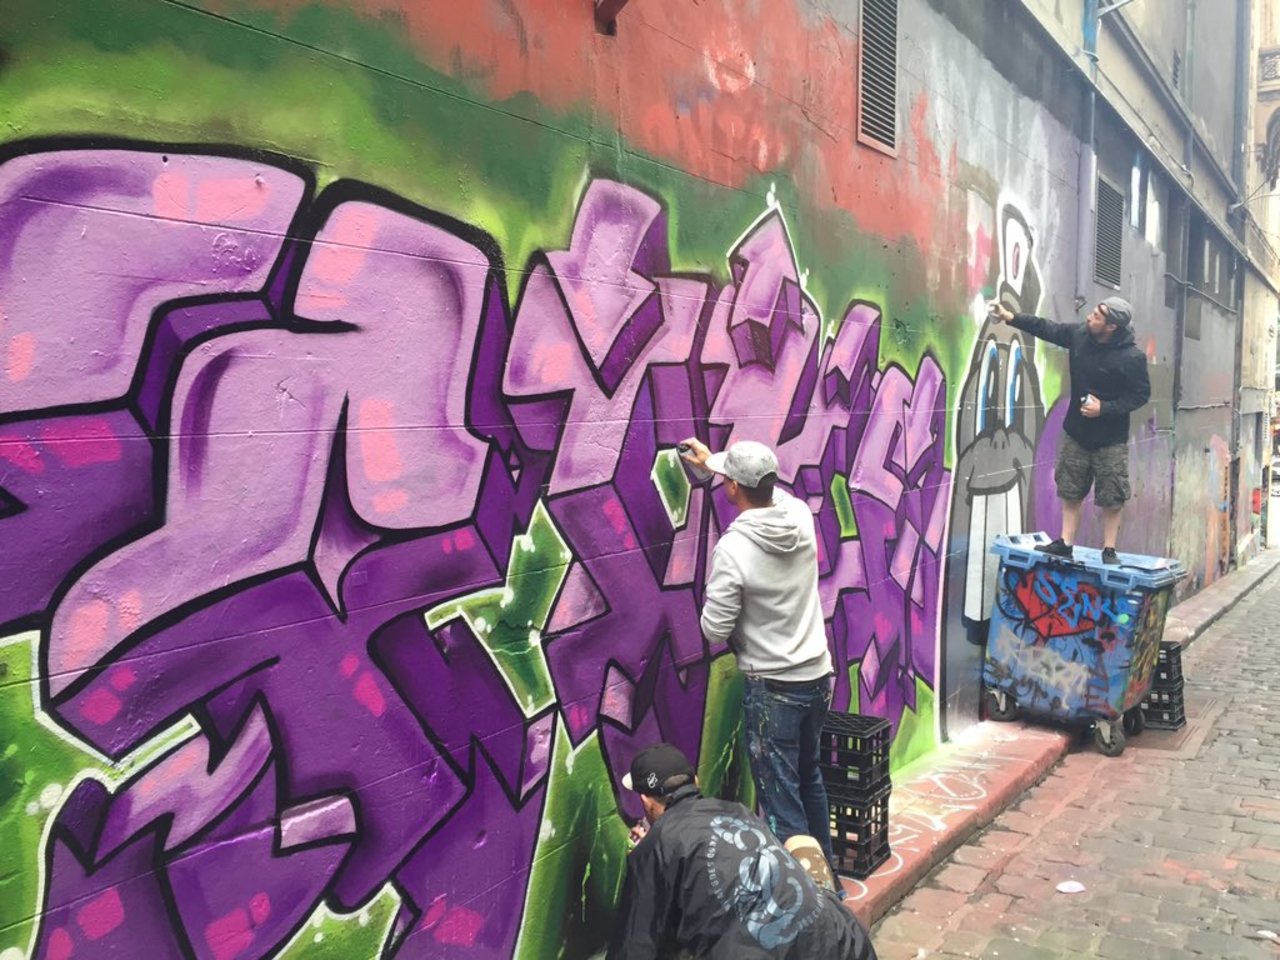 A little bit of #streetart happening in #Melbourne #cbd #graffiti #art #spraypaint #australia https://t.co/6556NlhP9x